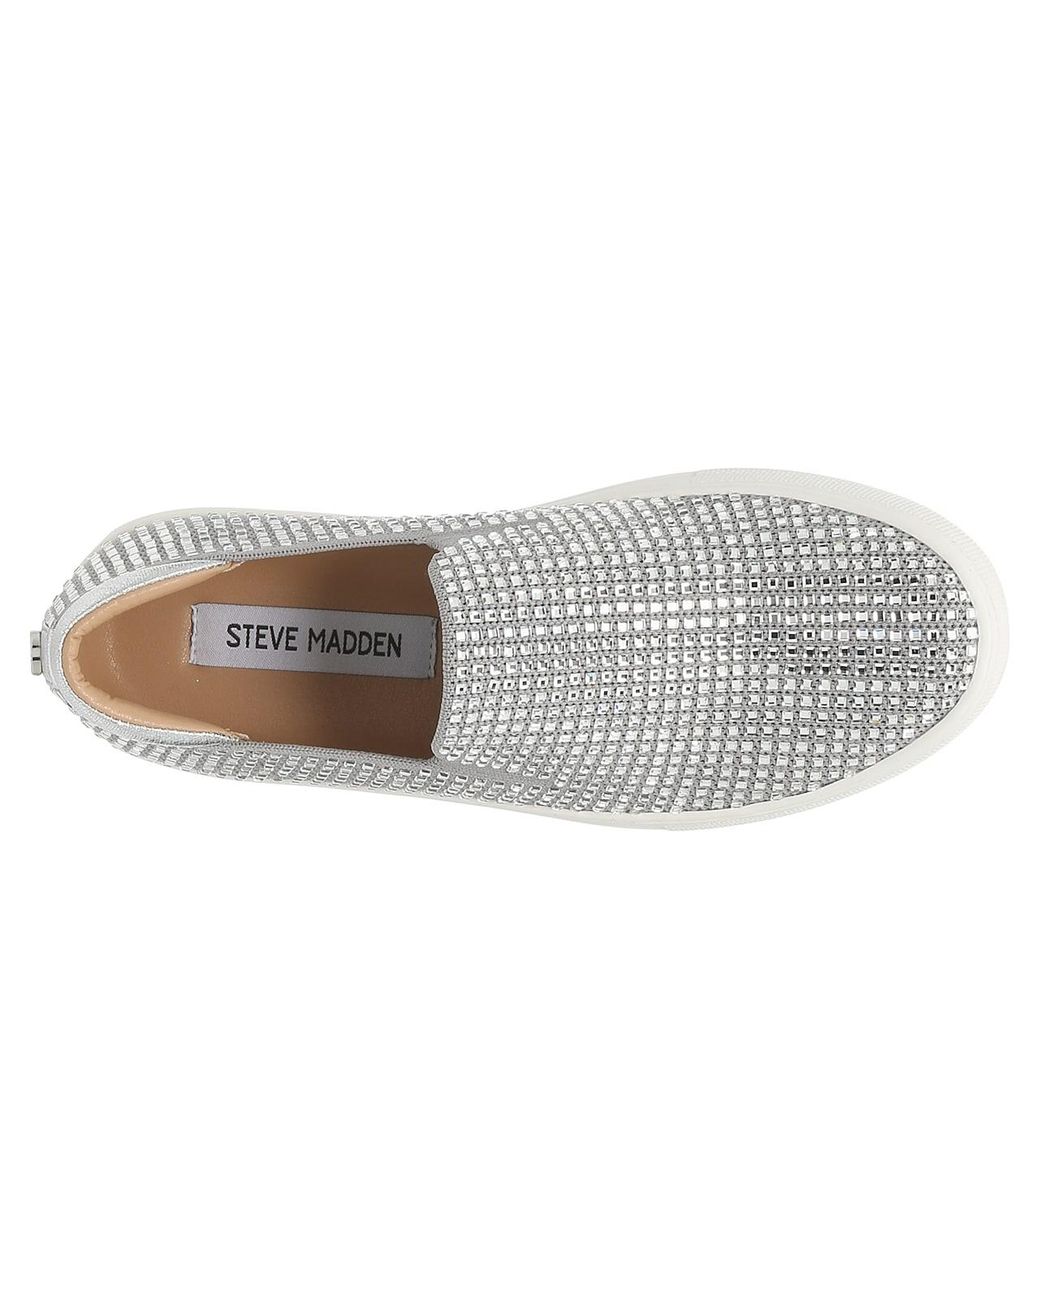 Steve Madden Vlair Rhinestone Knit Slip-On Sneaker - Free Shipping